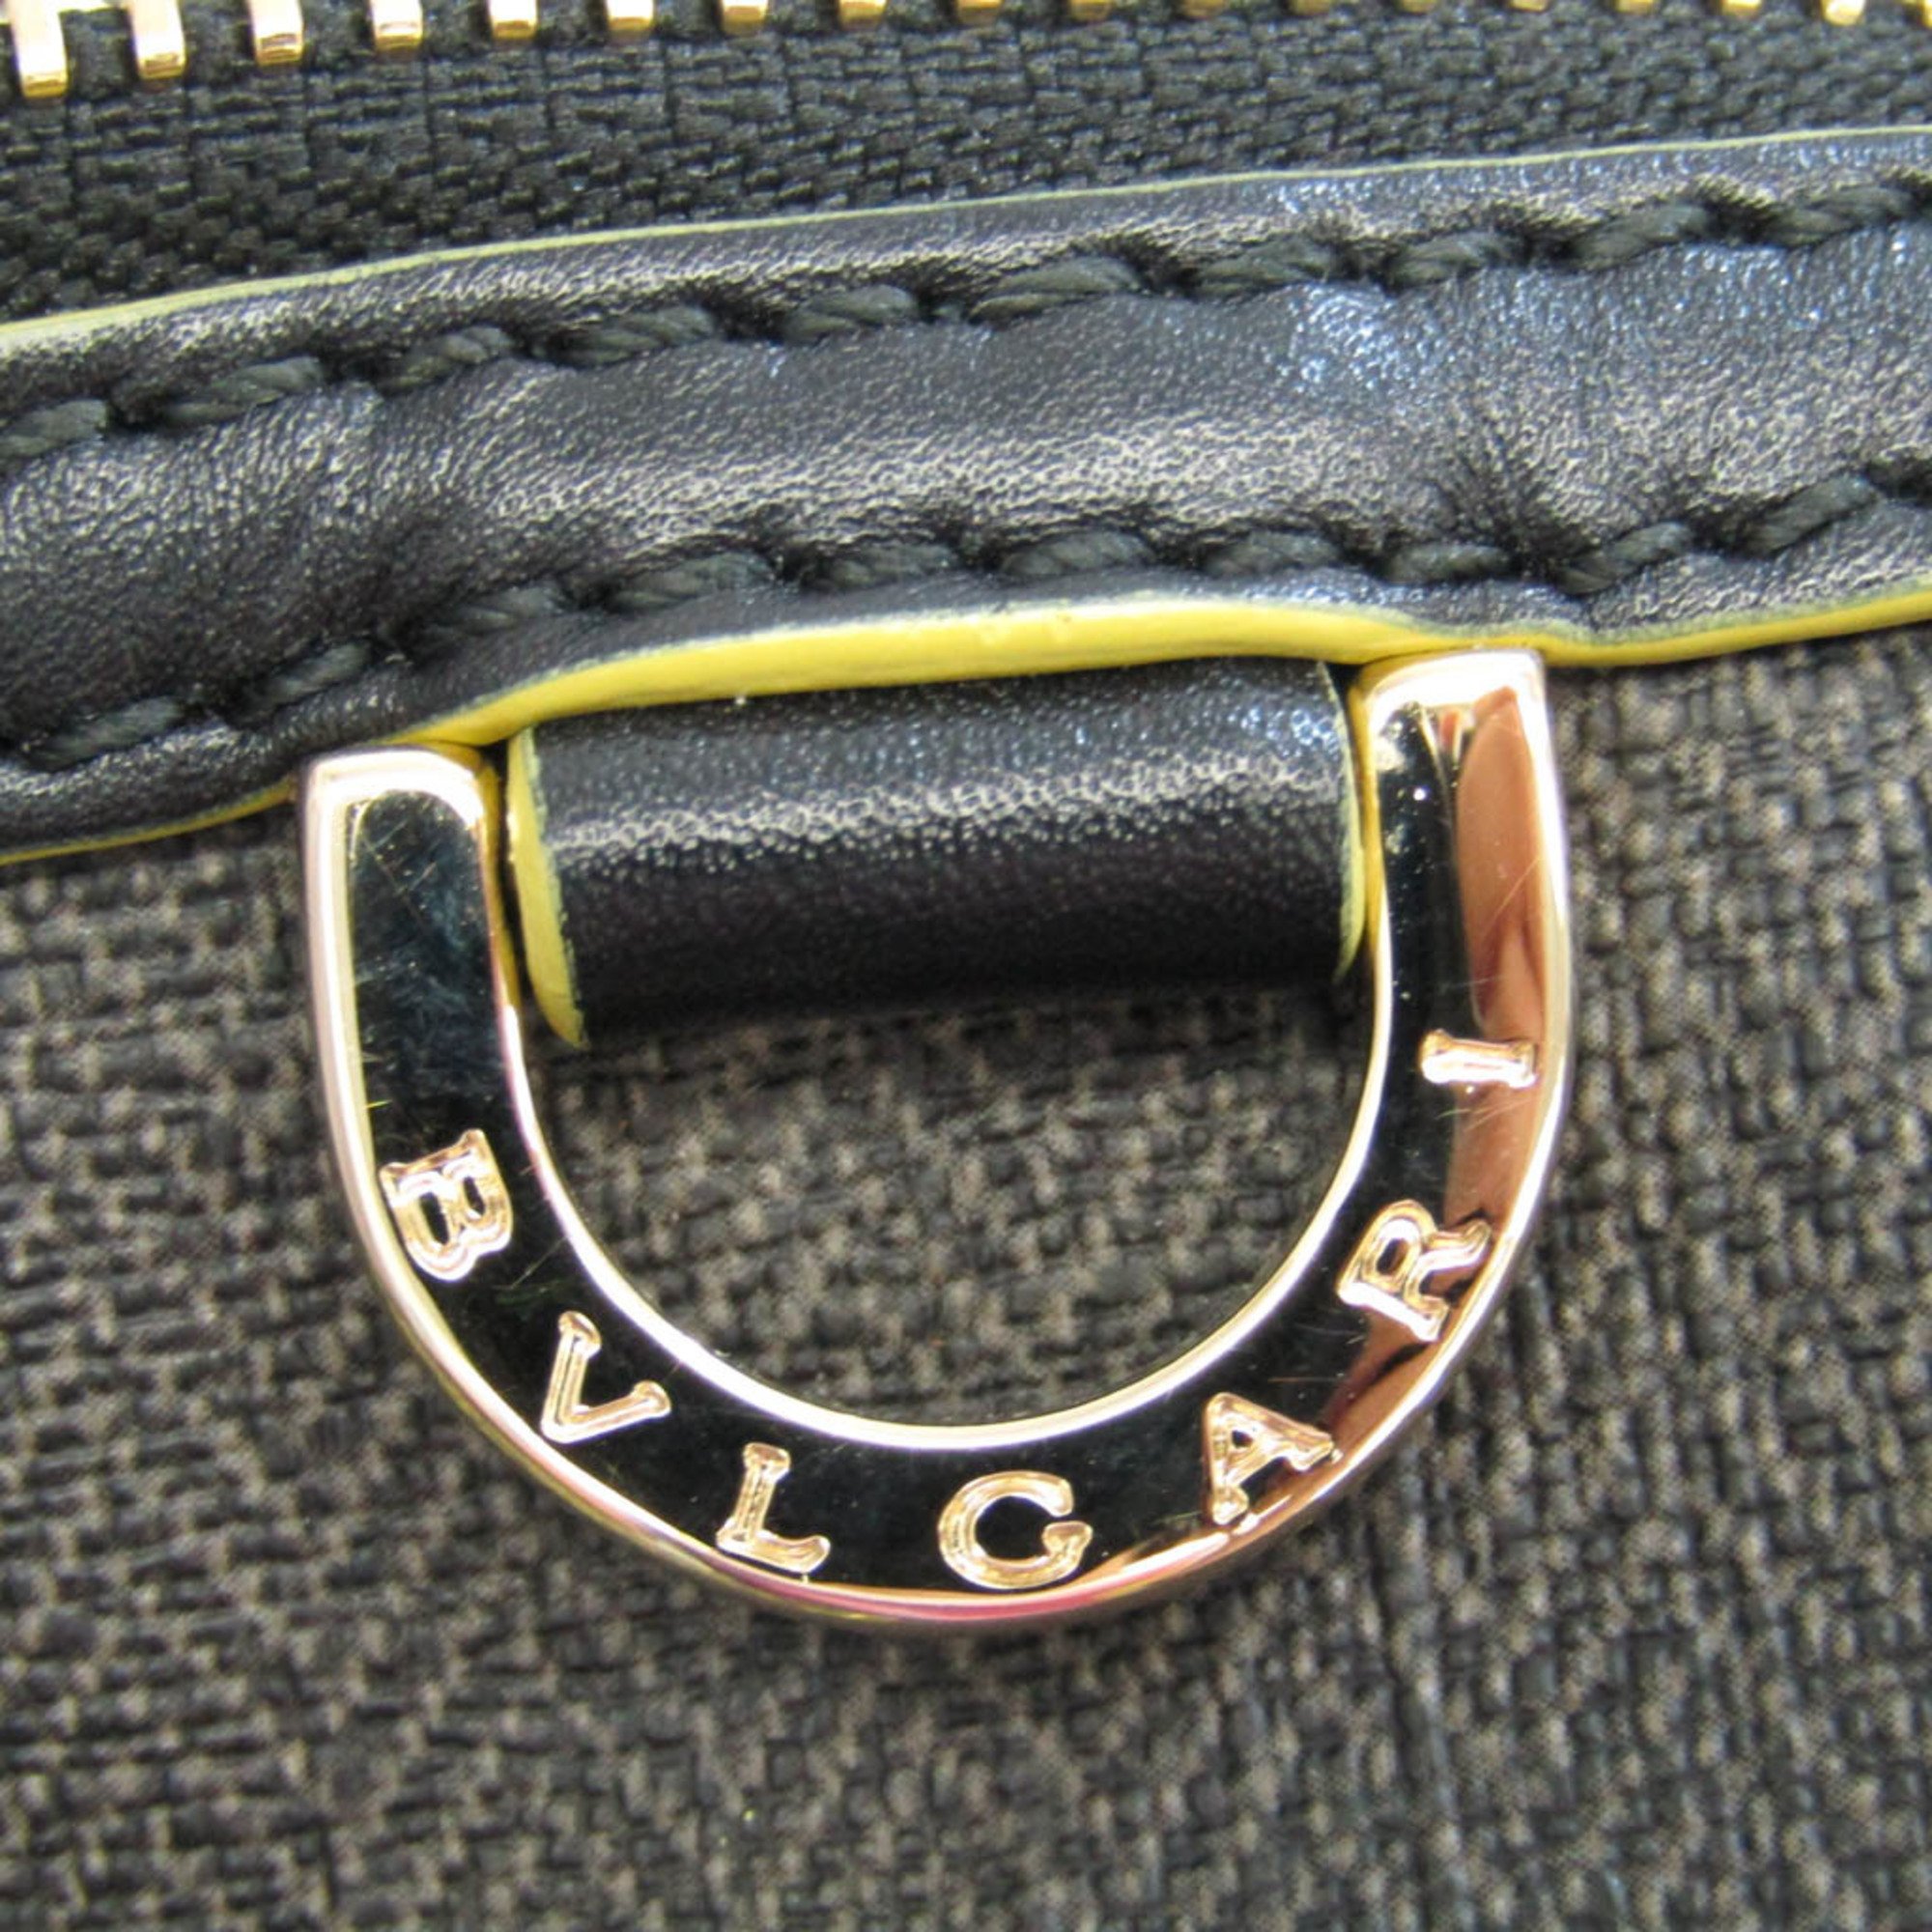 Bvlgari Collezione 32524 Women,Men Leather,PVC Shoulder Bag Black,Yellow